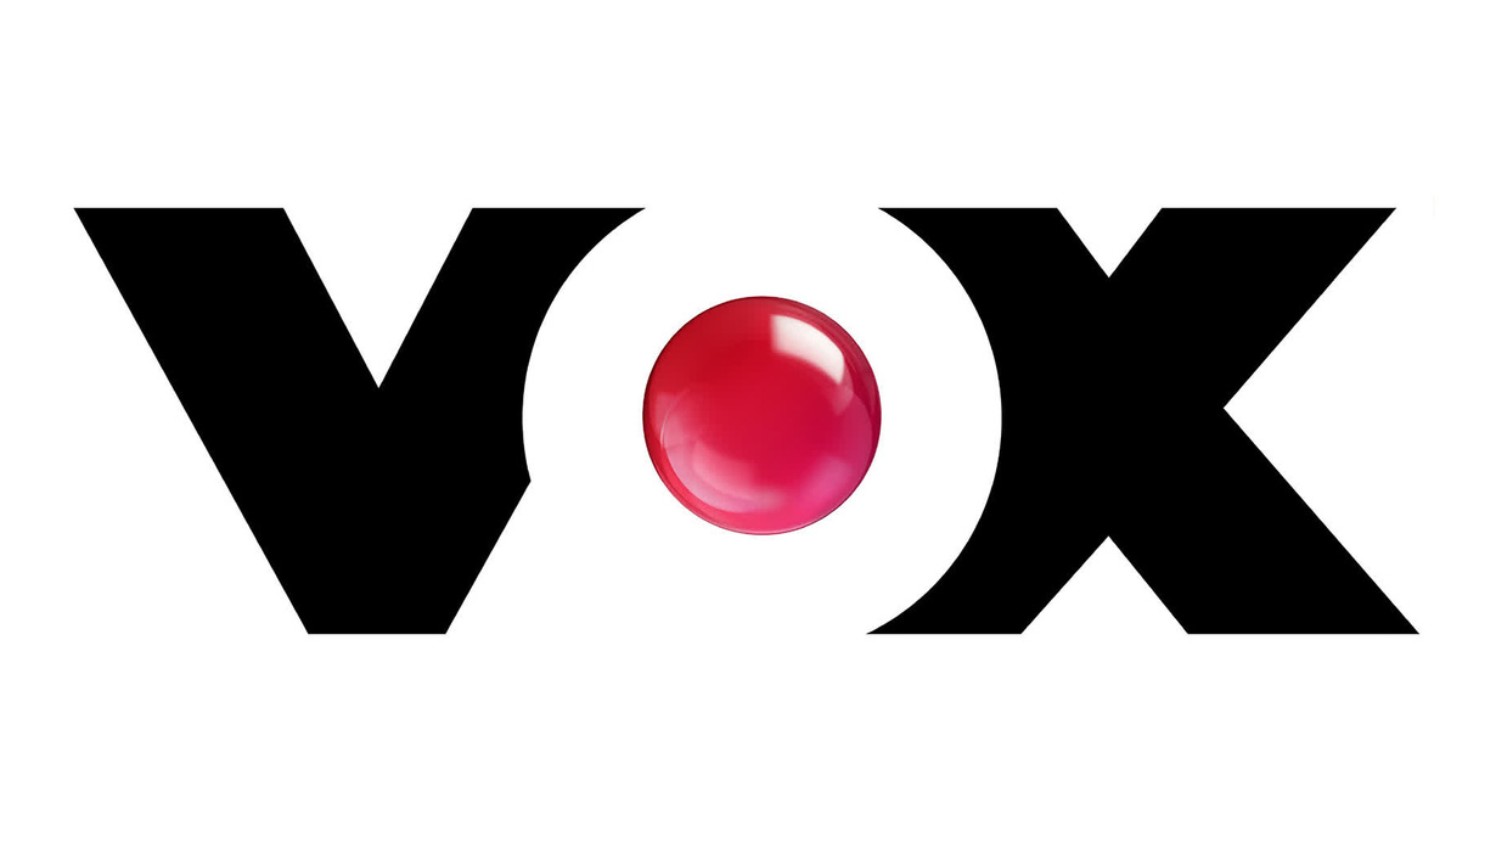 Vox Among Germany's Top 3 Commercial Channels - Bertelsmann SE